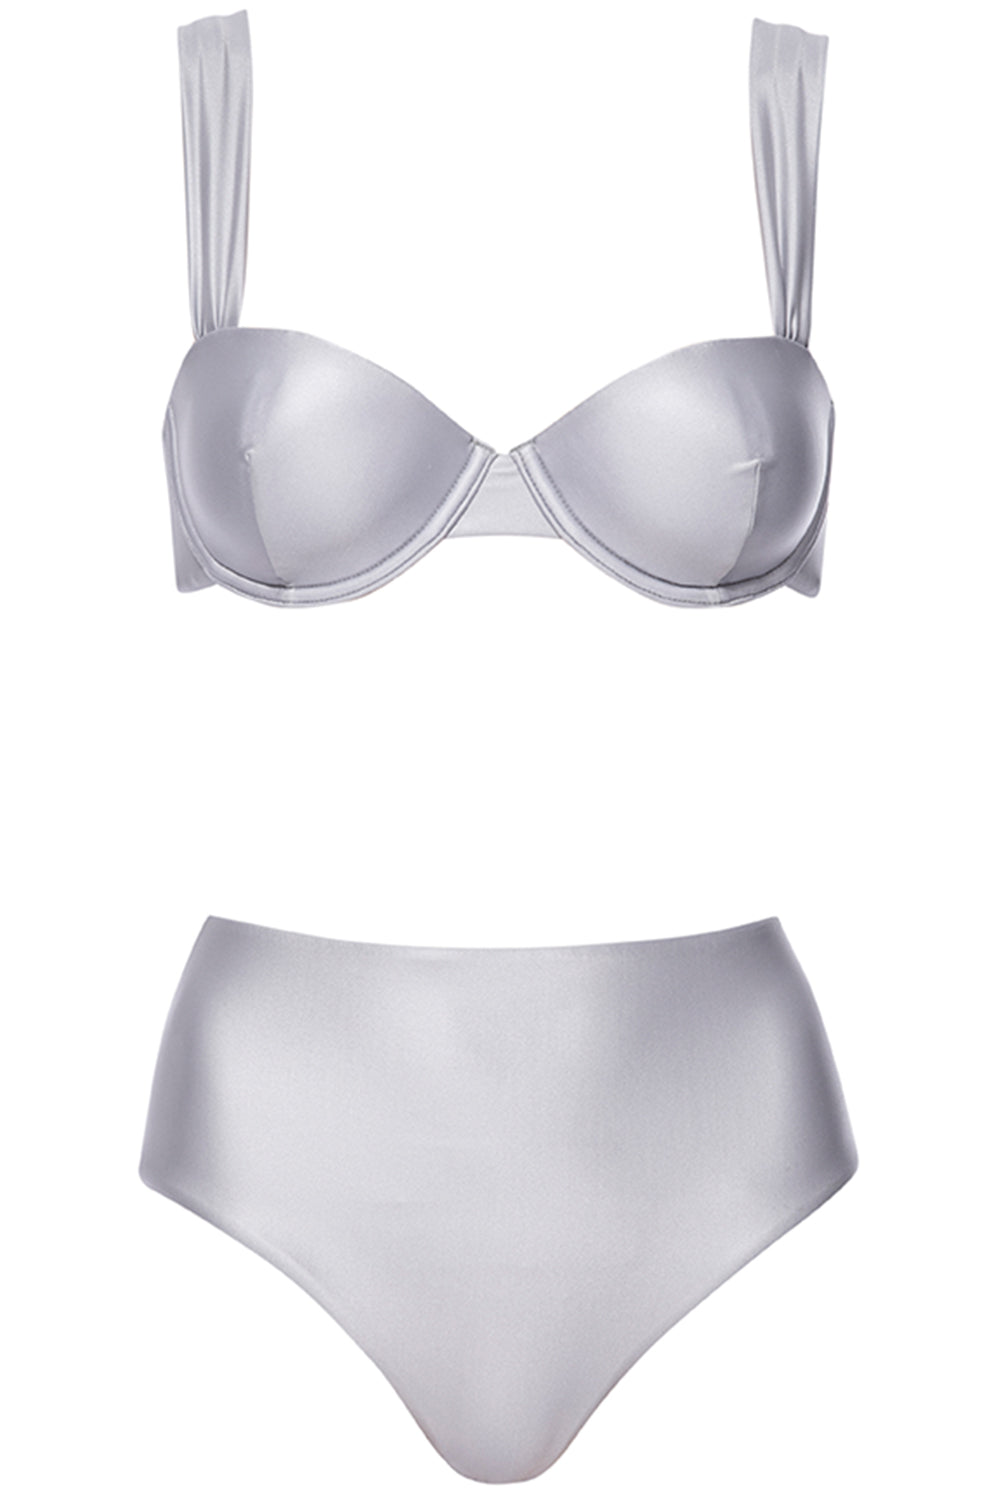 Hamptons Bikini Grey Set on white background front view.